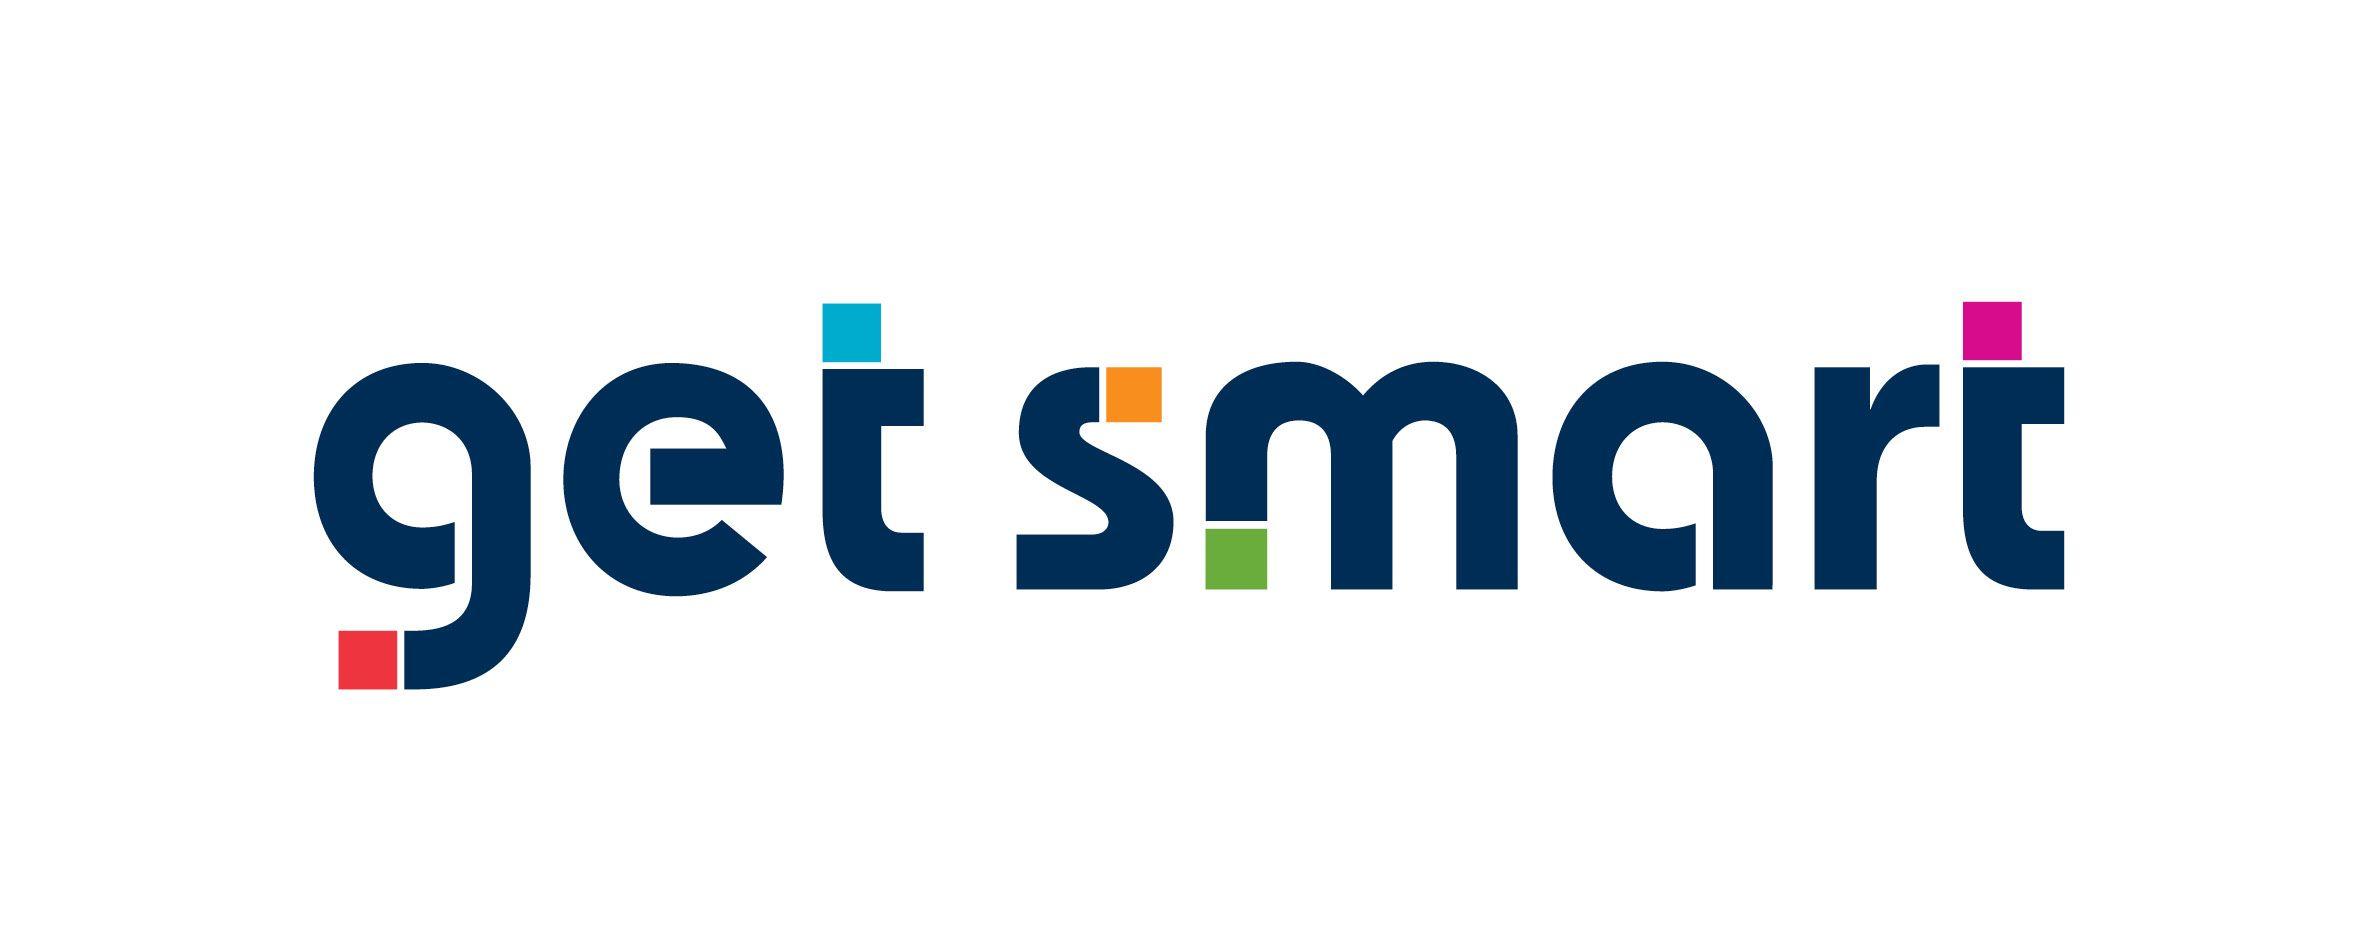 Get Logo - Get smart Logos